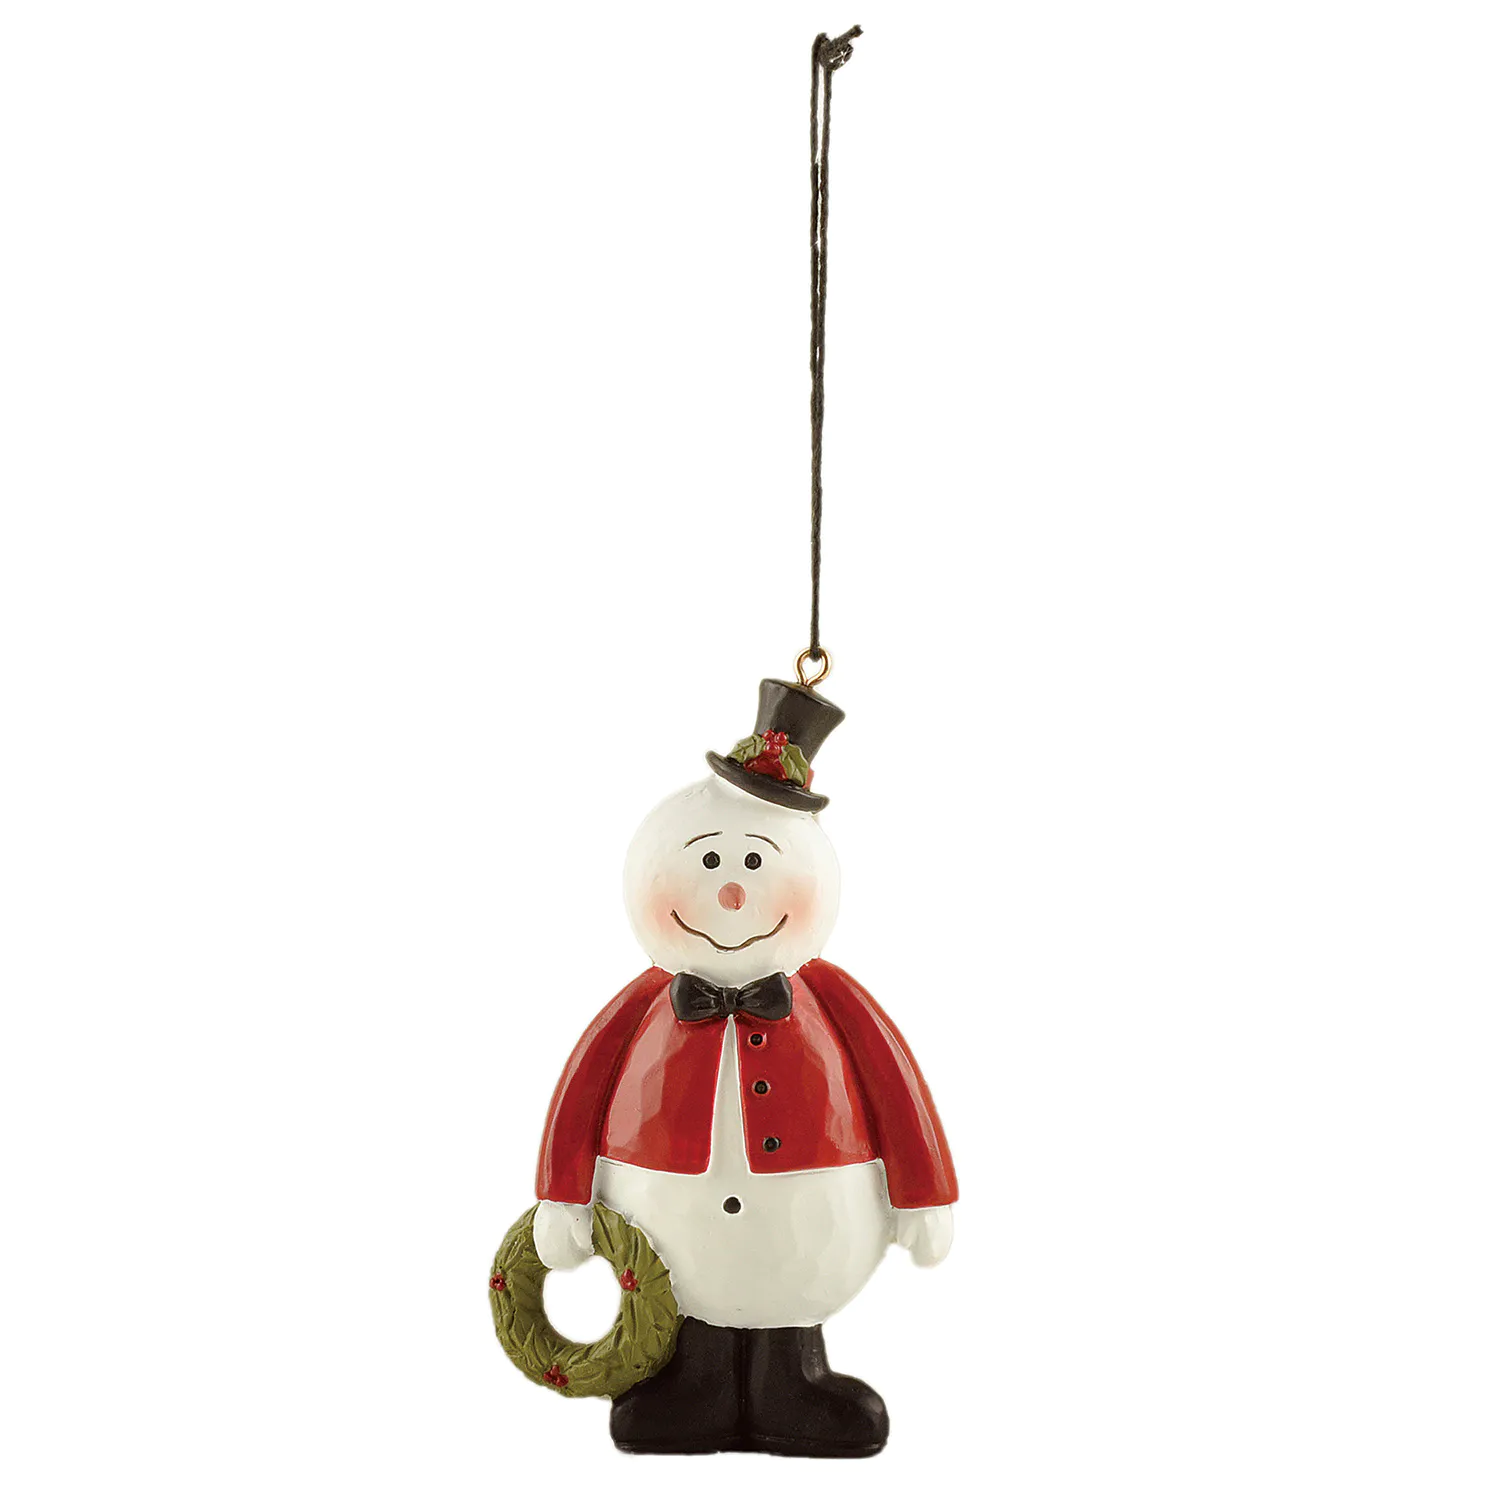 Seasonal Elegance Resin Christmas Figurine Joyful Snowman Hanging Ornament with Festive Wreath for Holiday Decor 238-52149